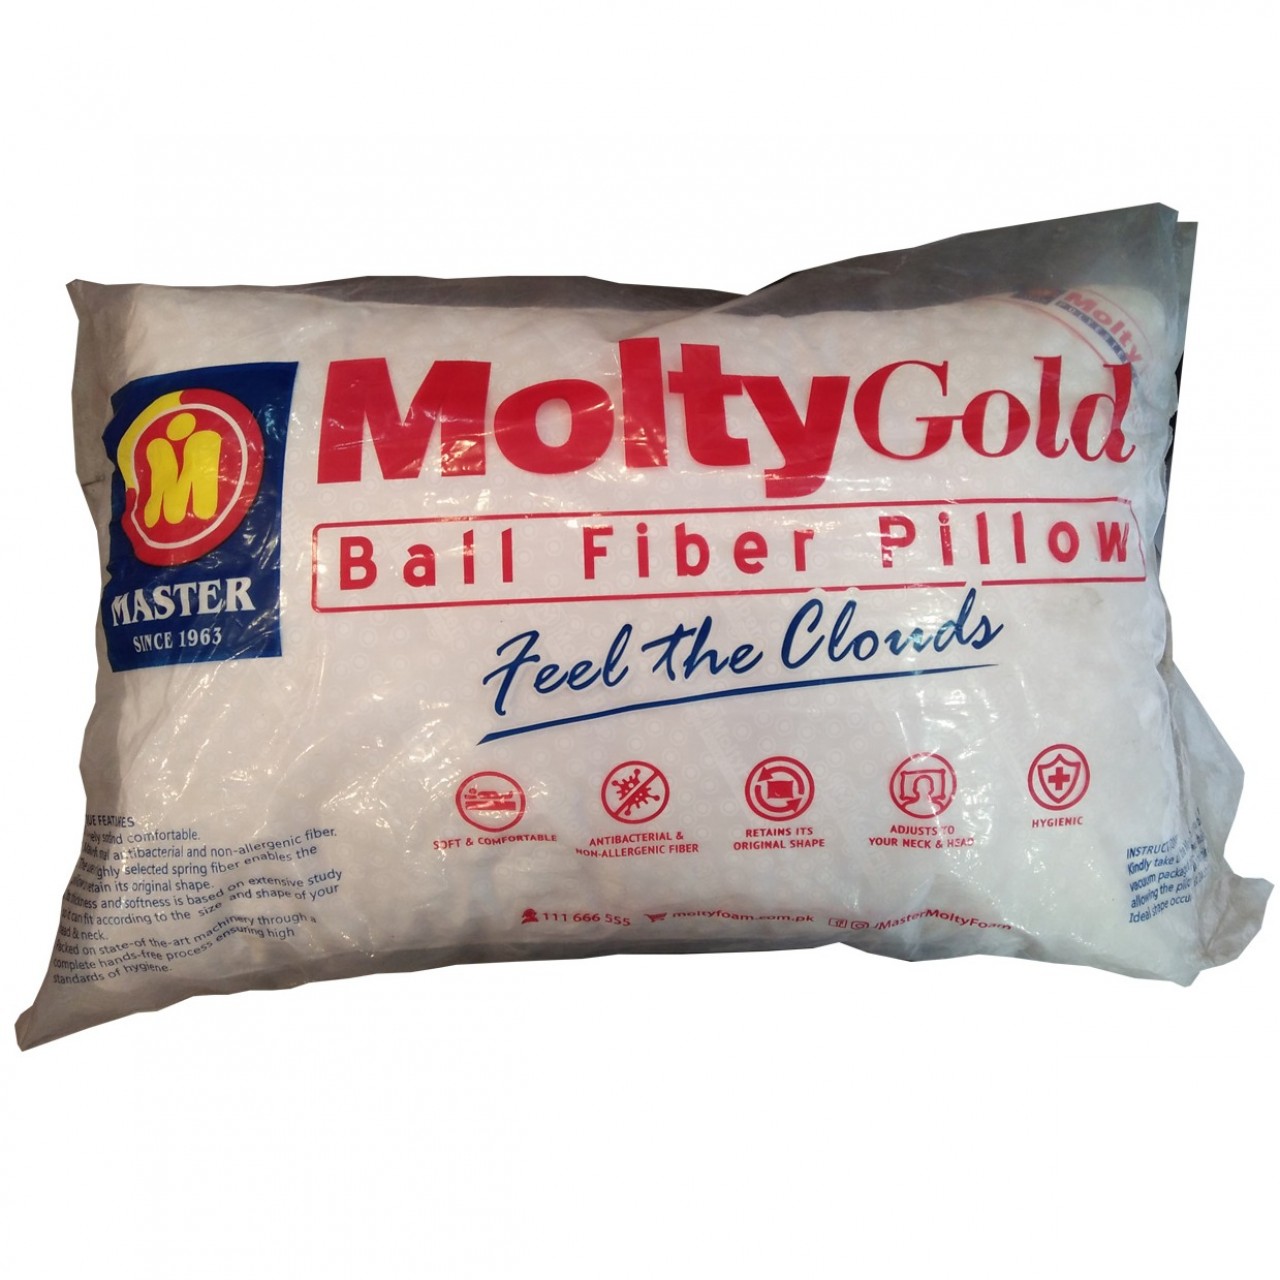 Master Molty Gold Bail Fiber Pillow - Antibacterial & Non-Allergenic